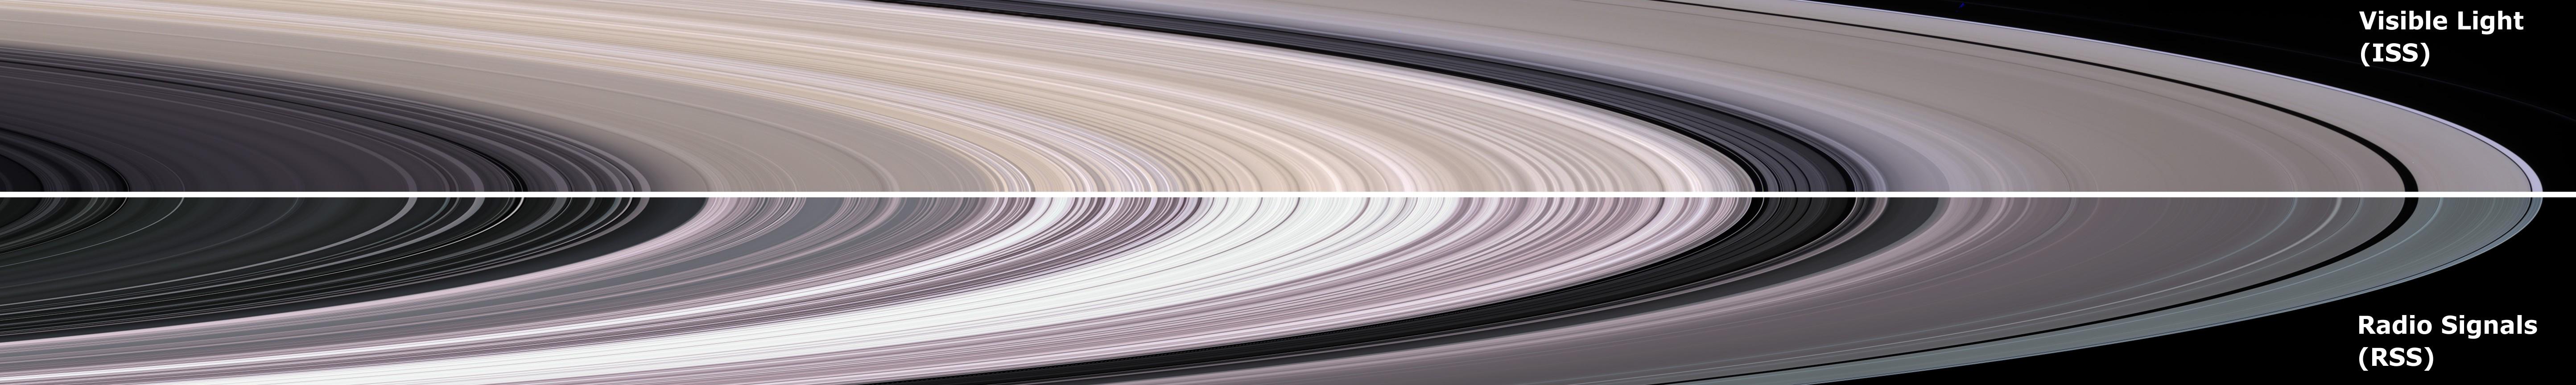 Long image of Saturn's rings